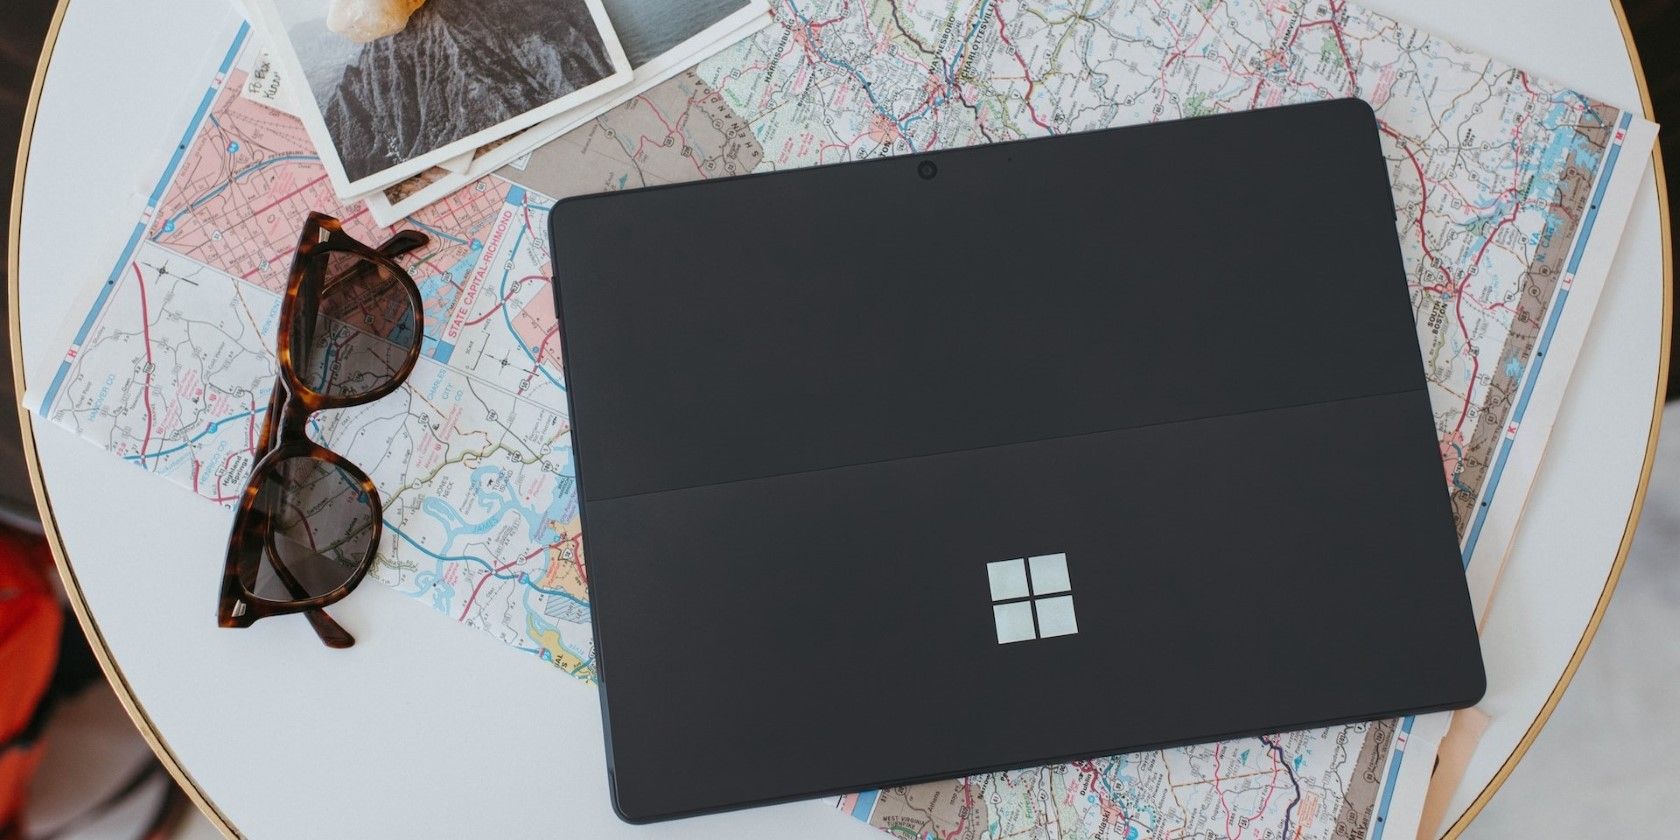 a black windows laptop on a white table